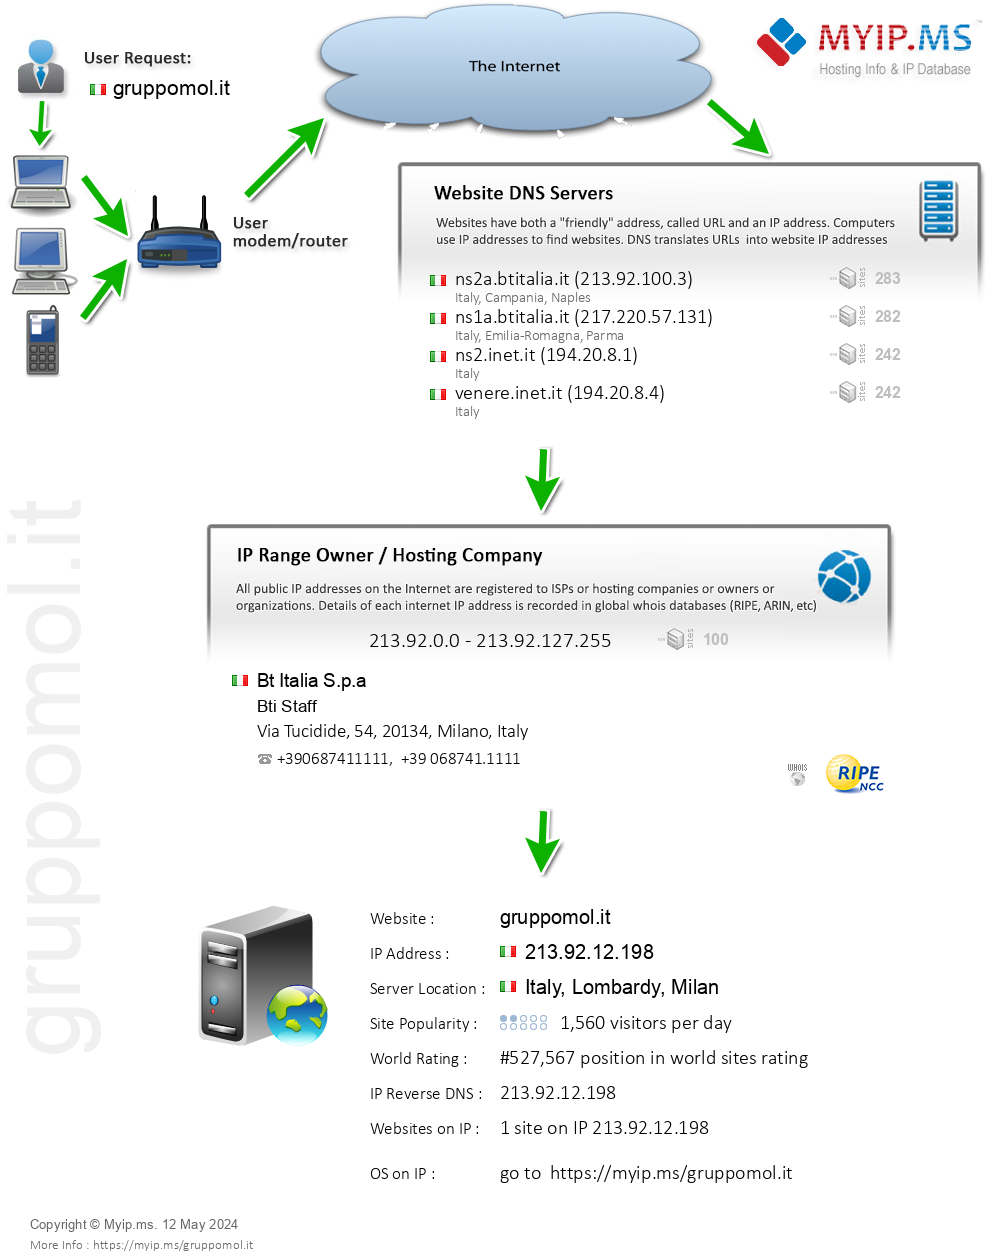 Gruppomol.it - Website Hosting Visual IP Diagram